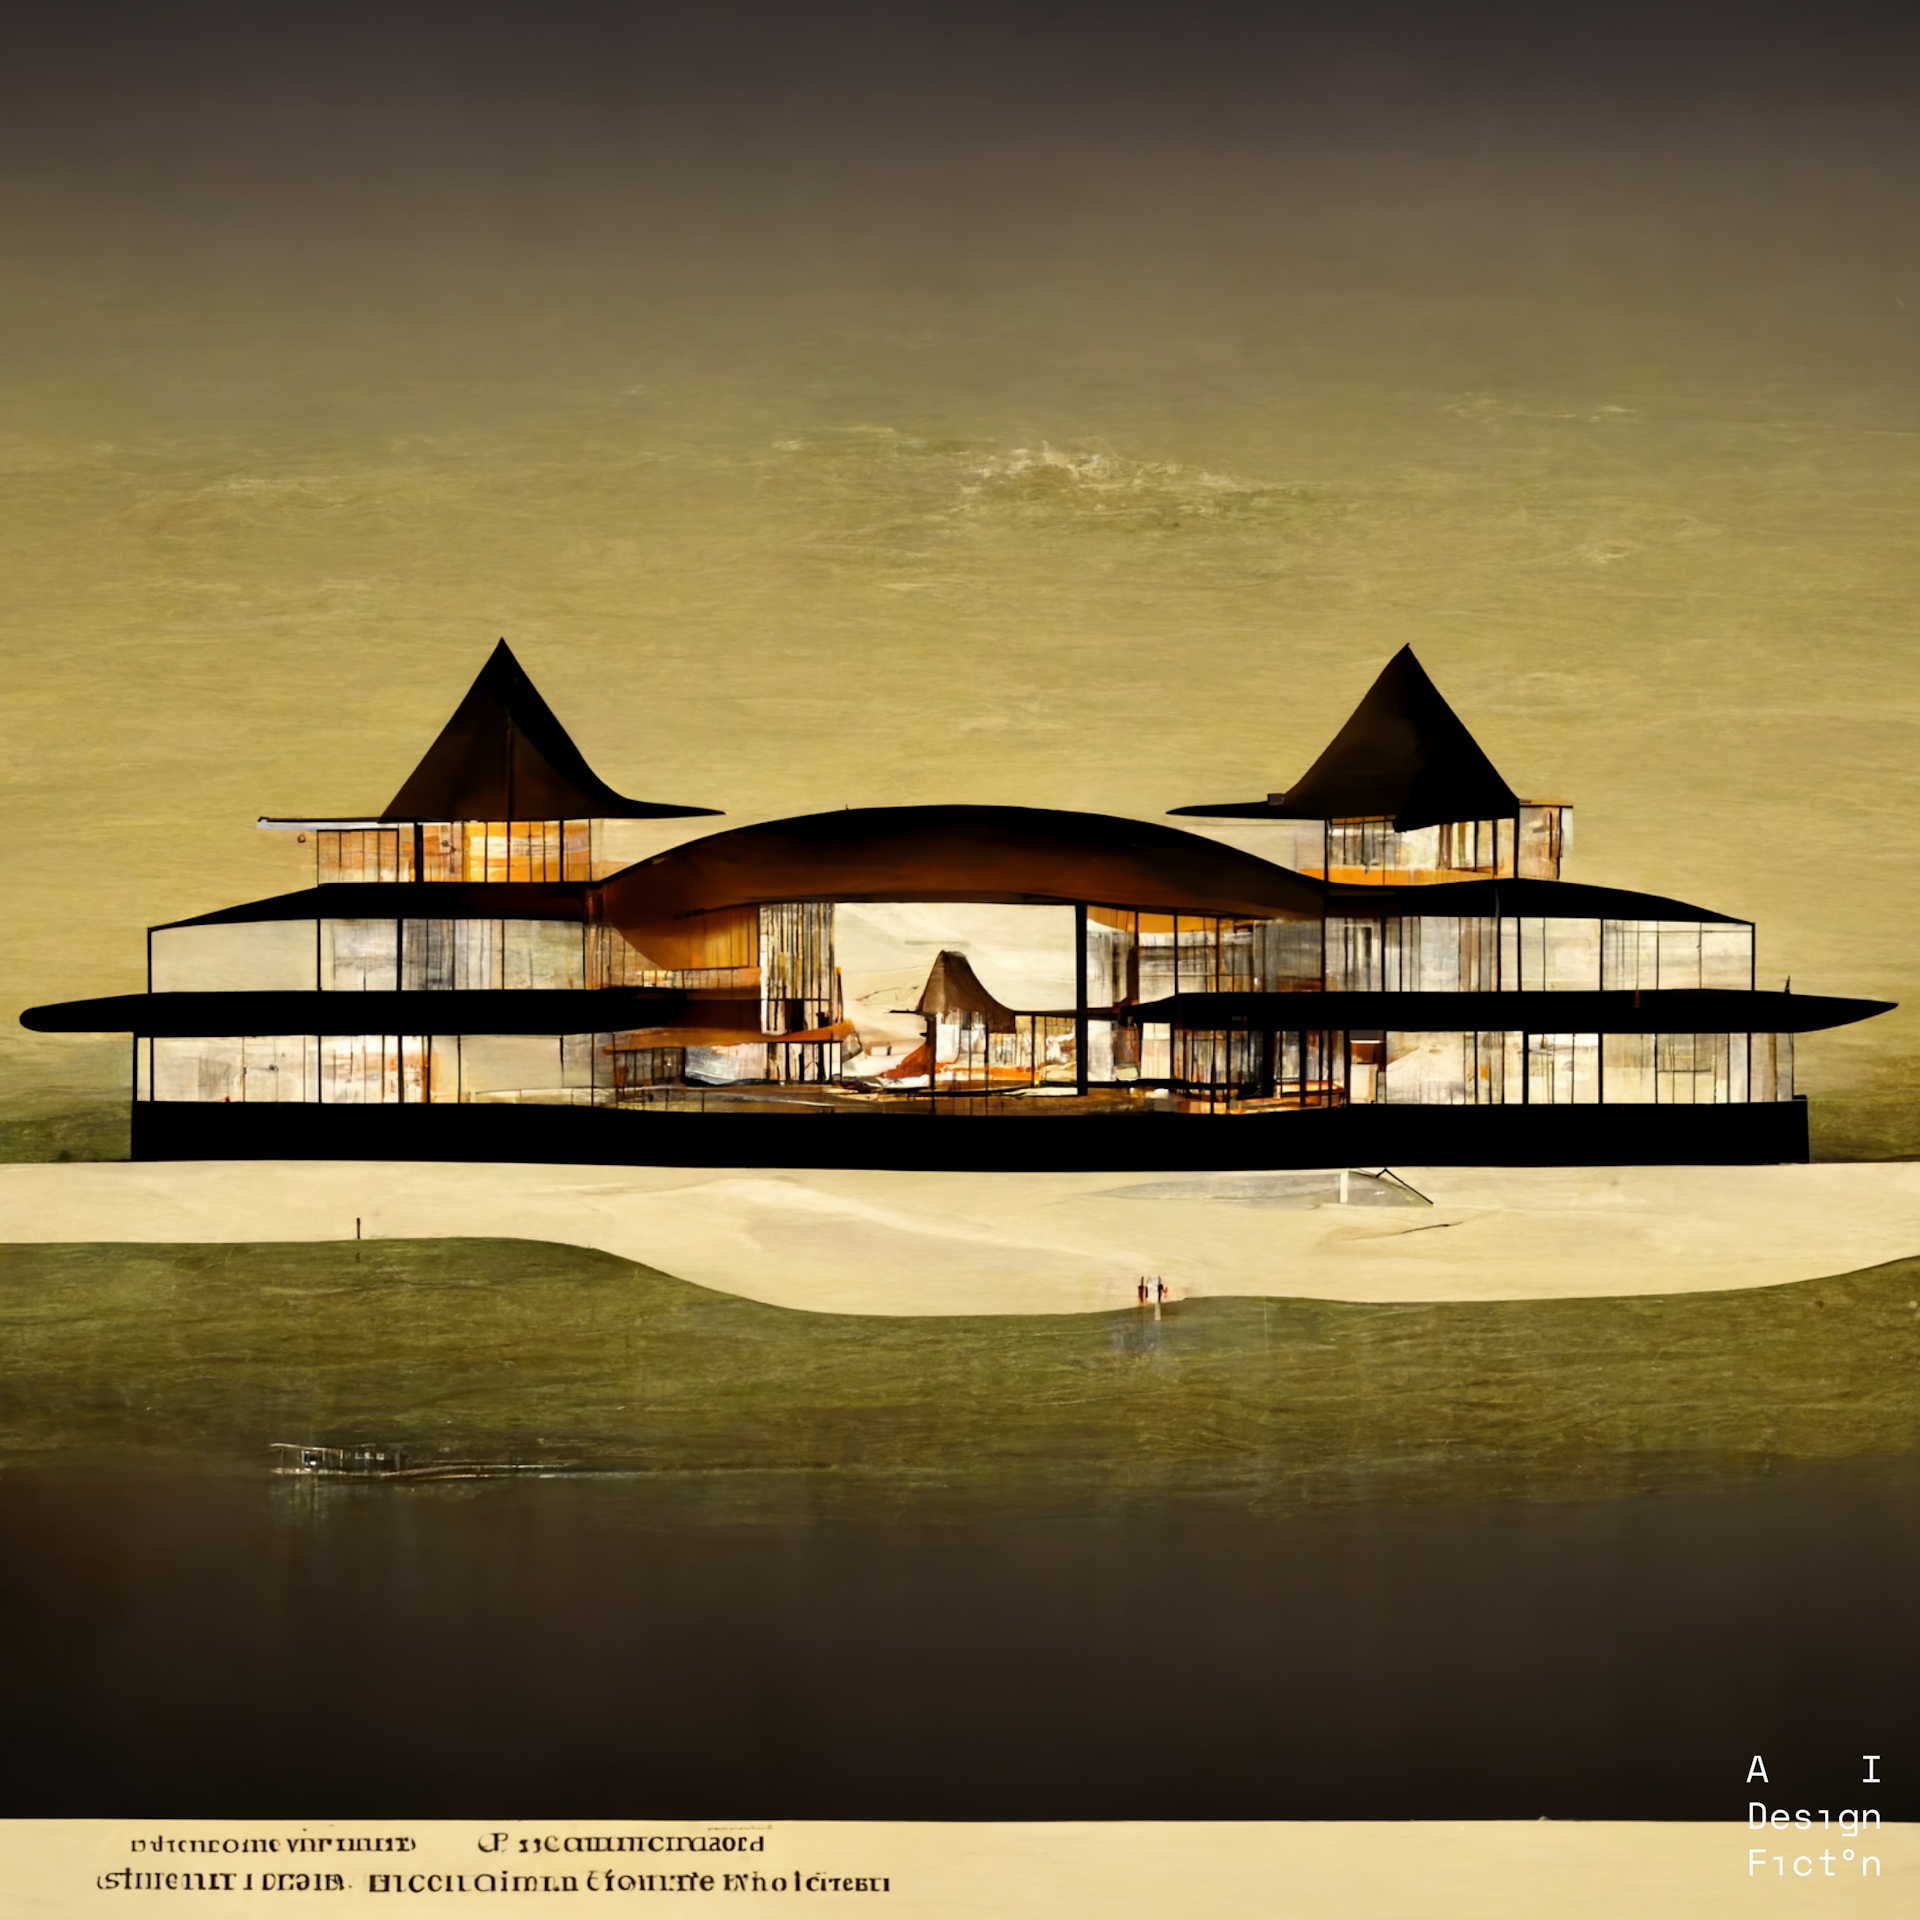 "Summer resort designed by Caravaggio"